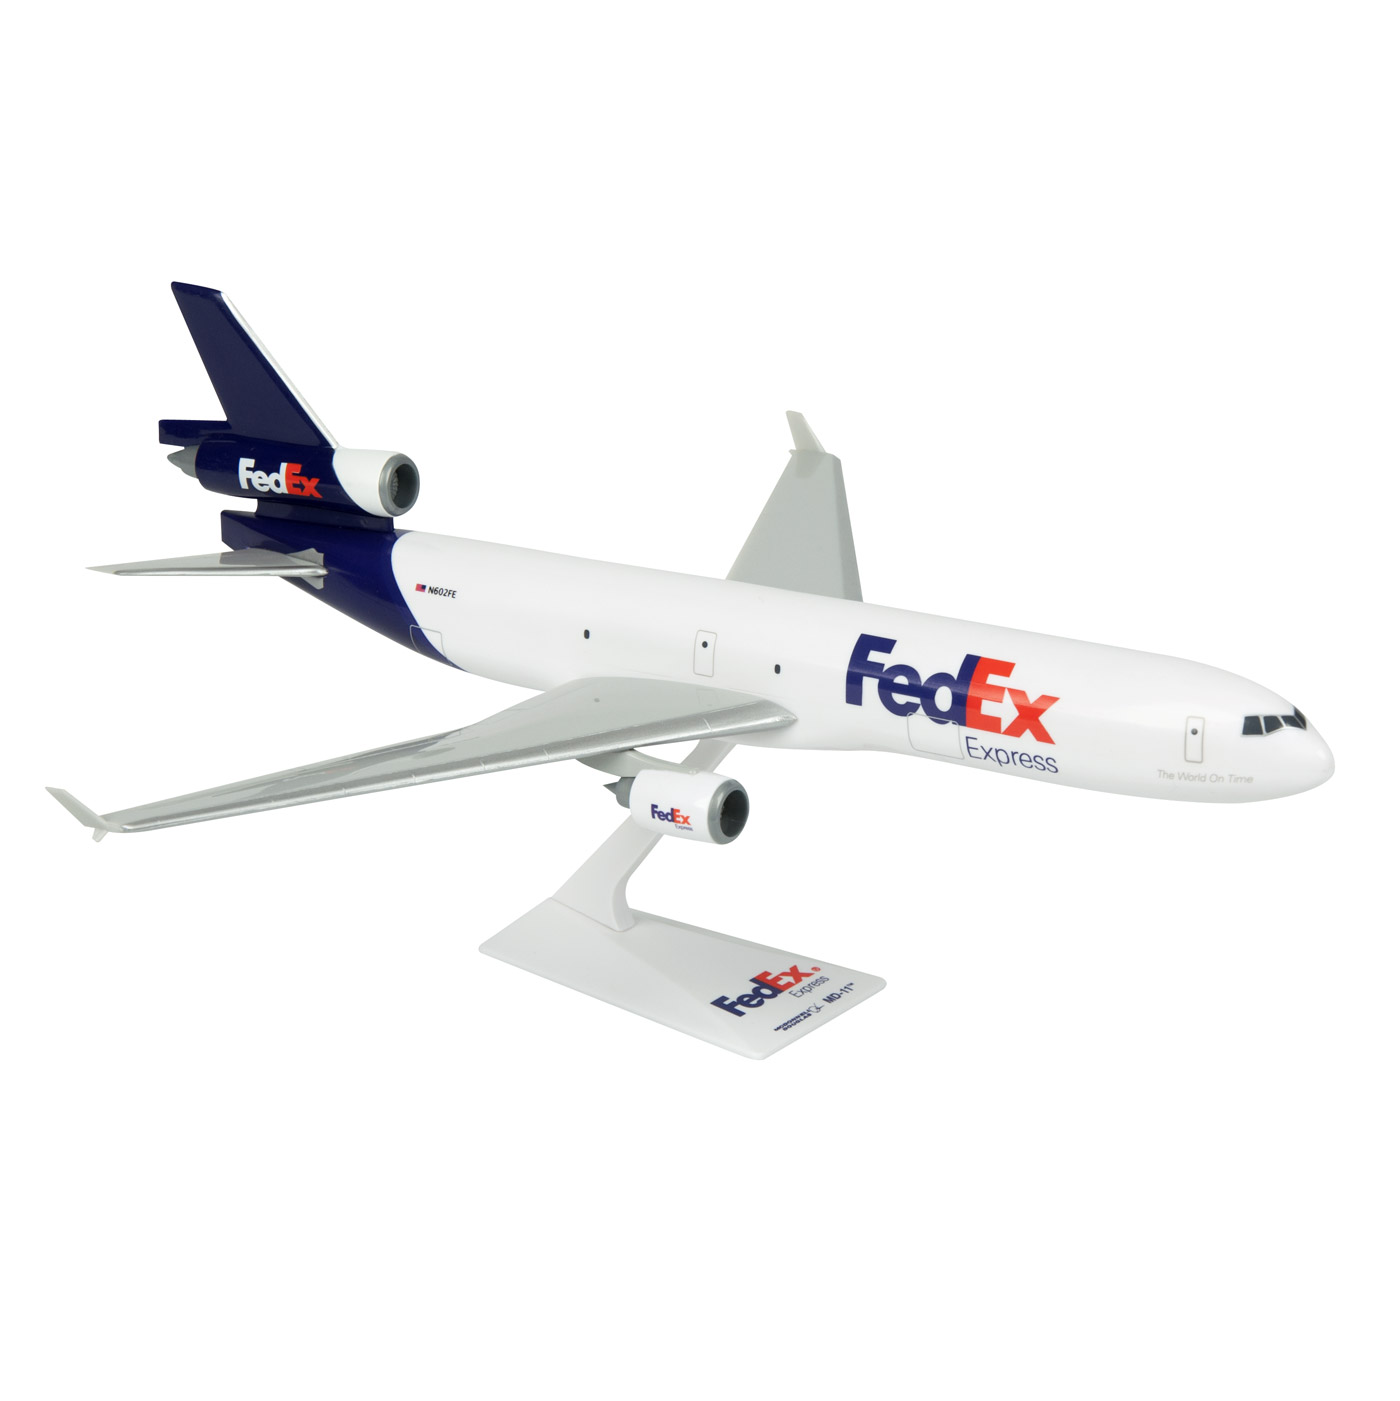 FedEx Express Economy MD-11 Plane 1:200 | The FedEx Company Store